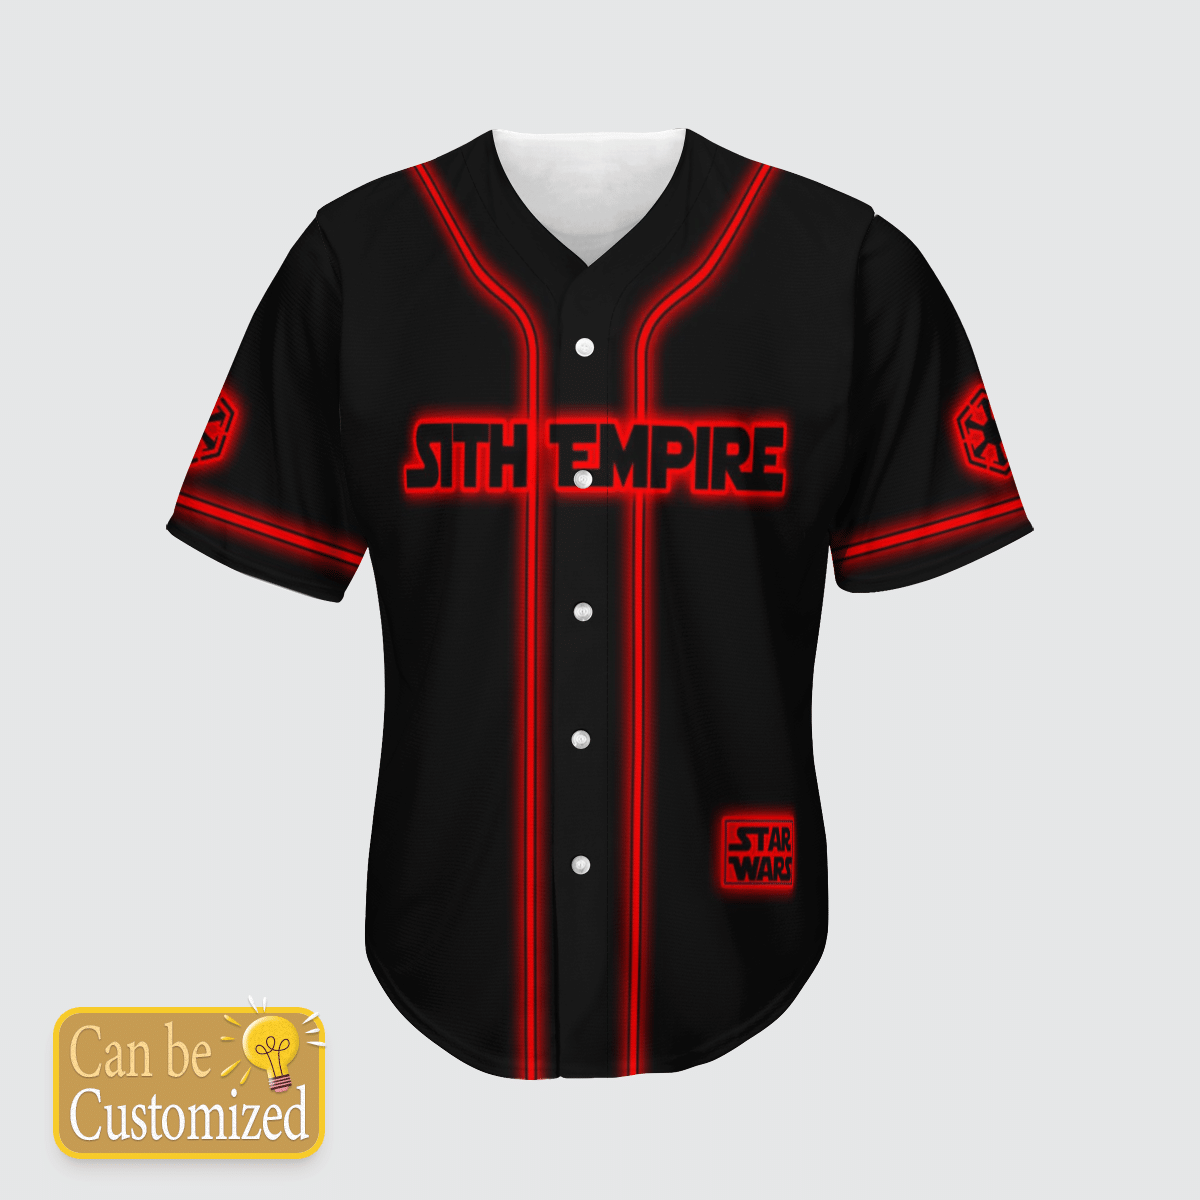 Sith Empire custom name baseball shirt